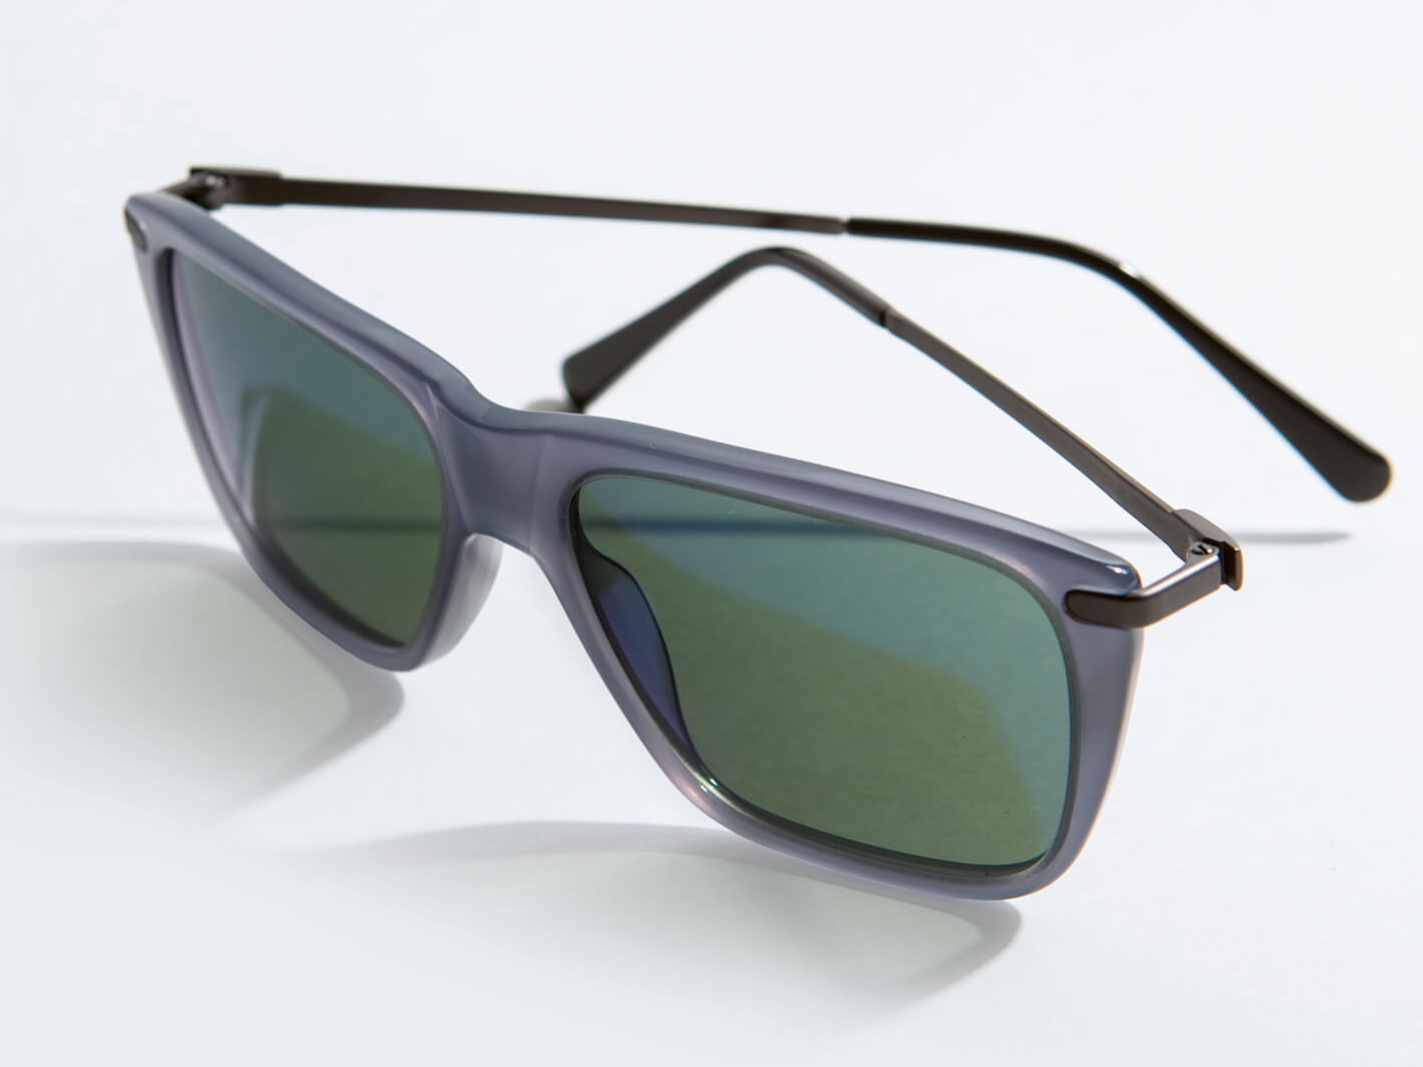 Sunglasses for driving (mid-range to high light intensity)